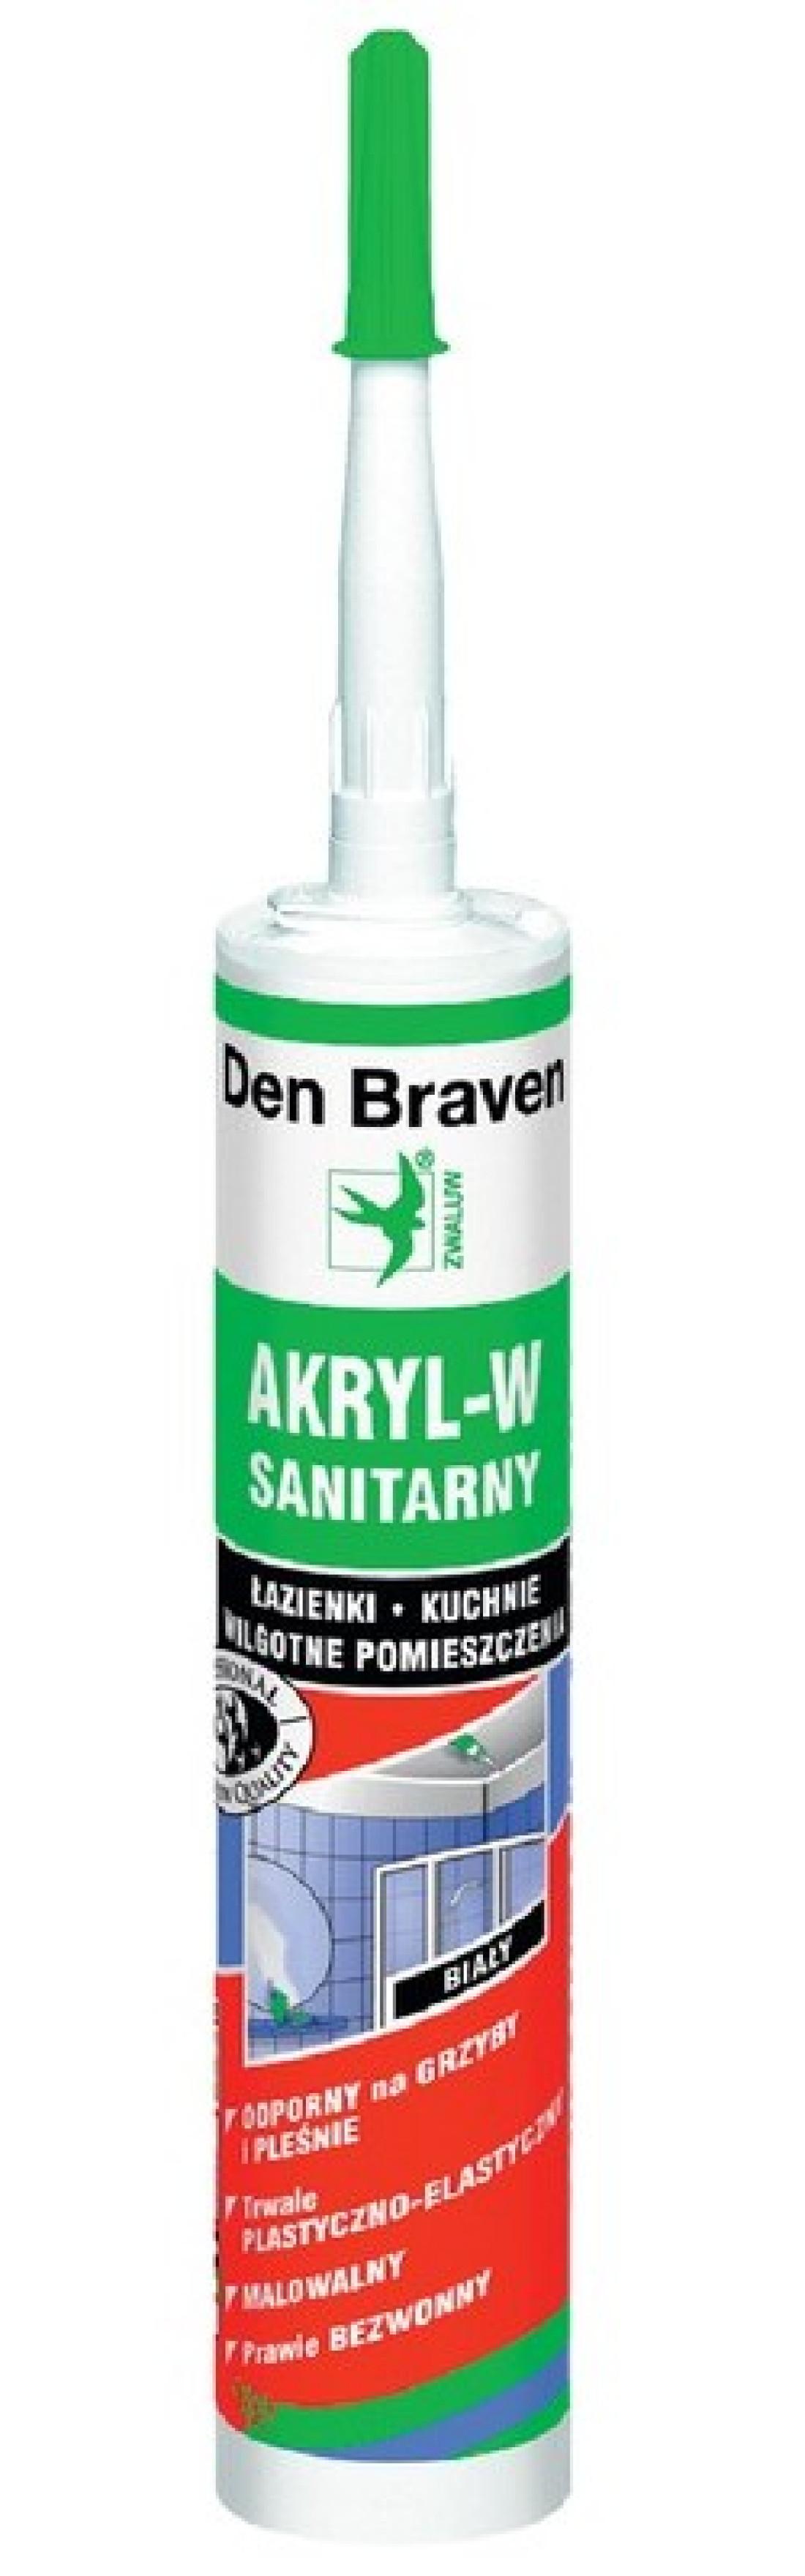 Akryl – W SANITARNY firmy Den Braven 